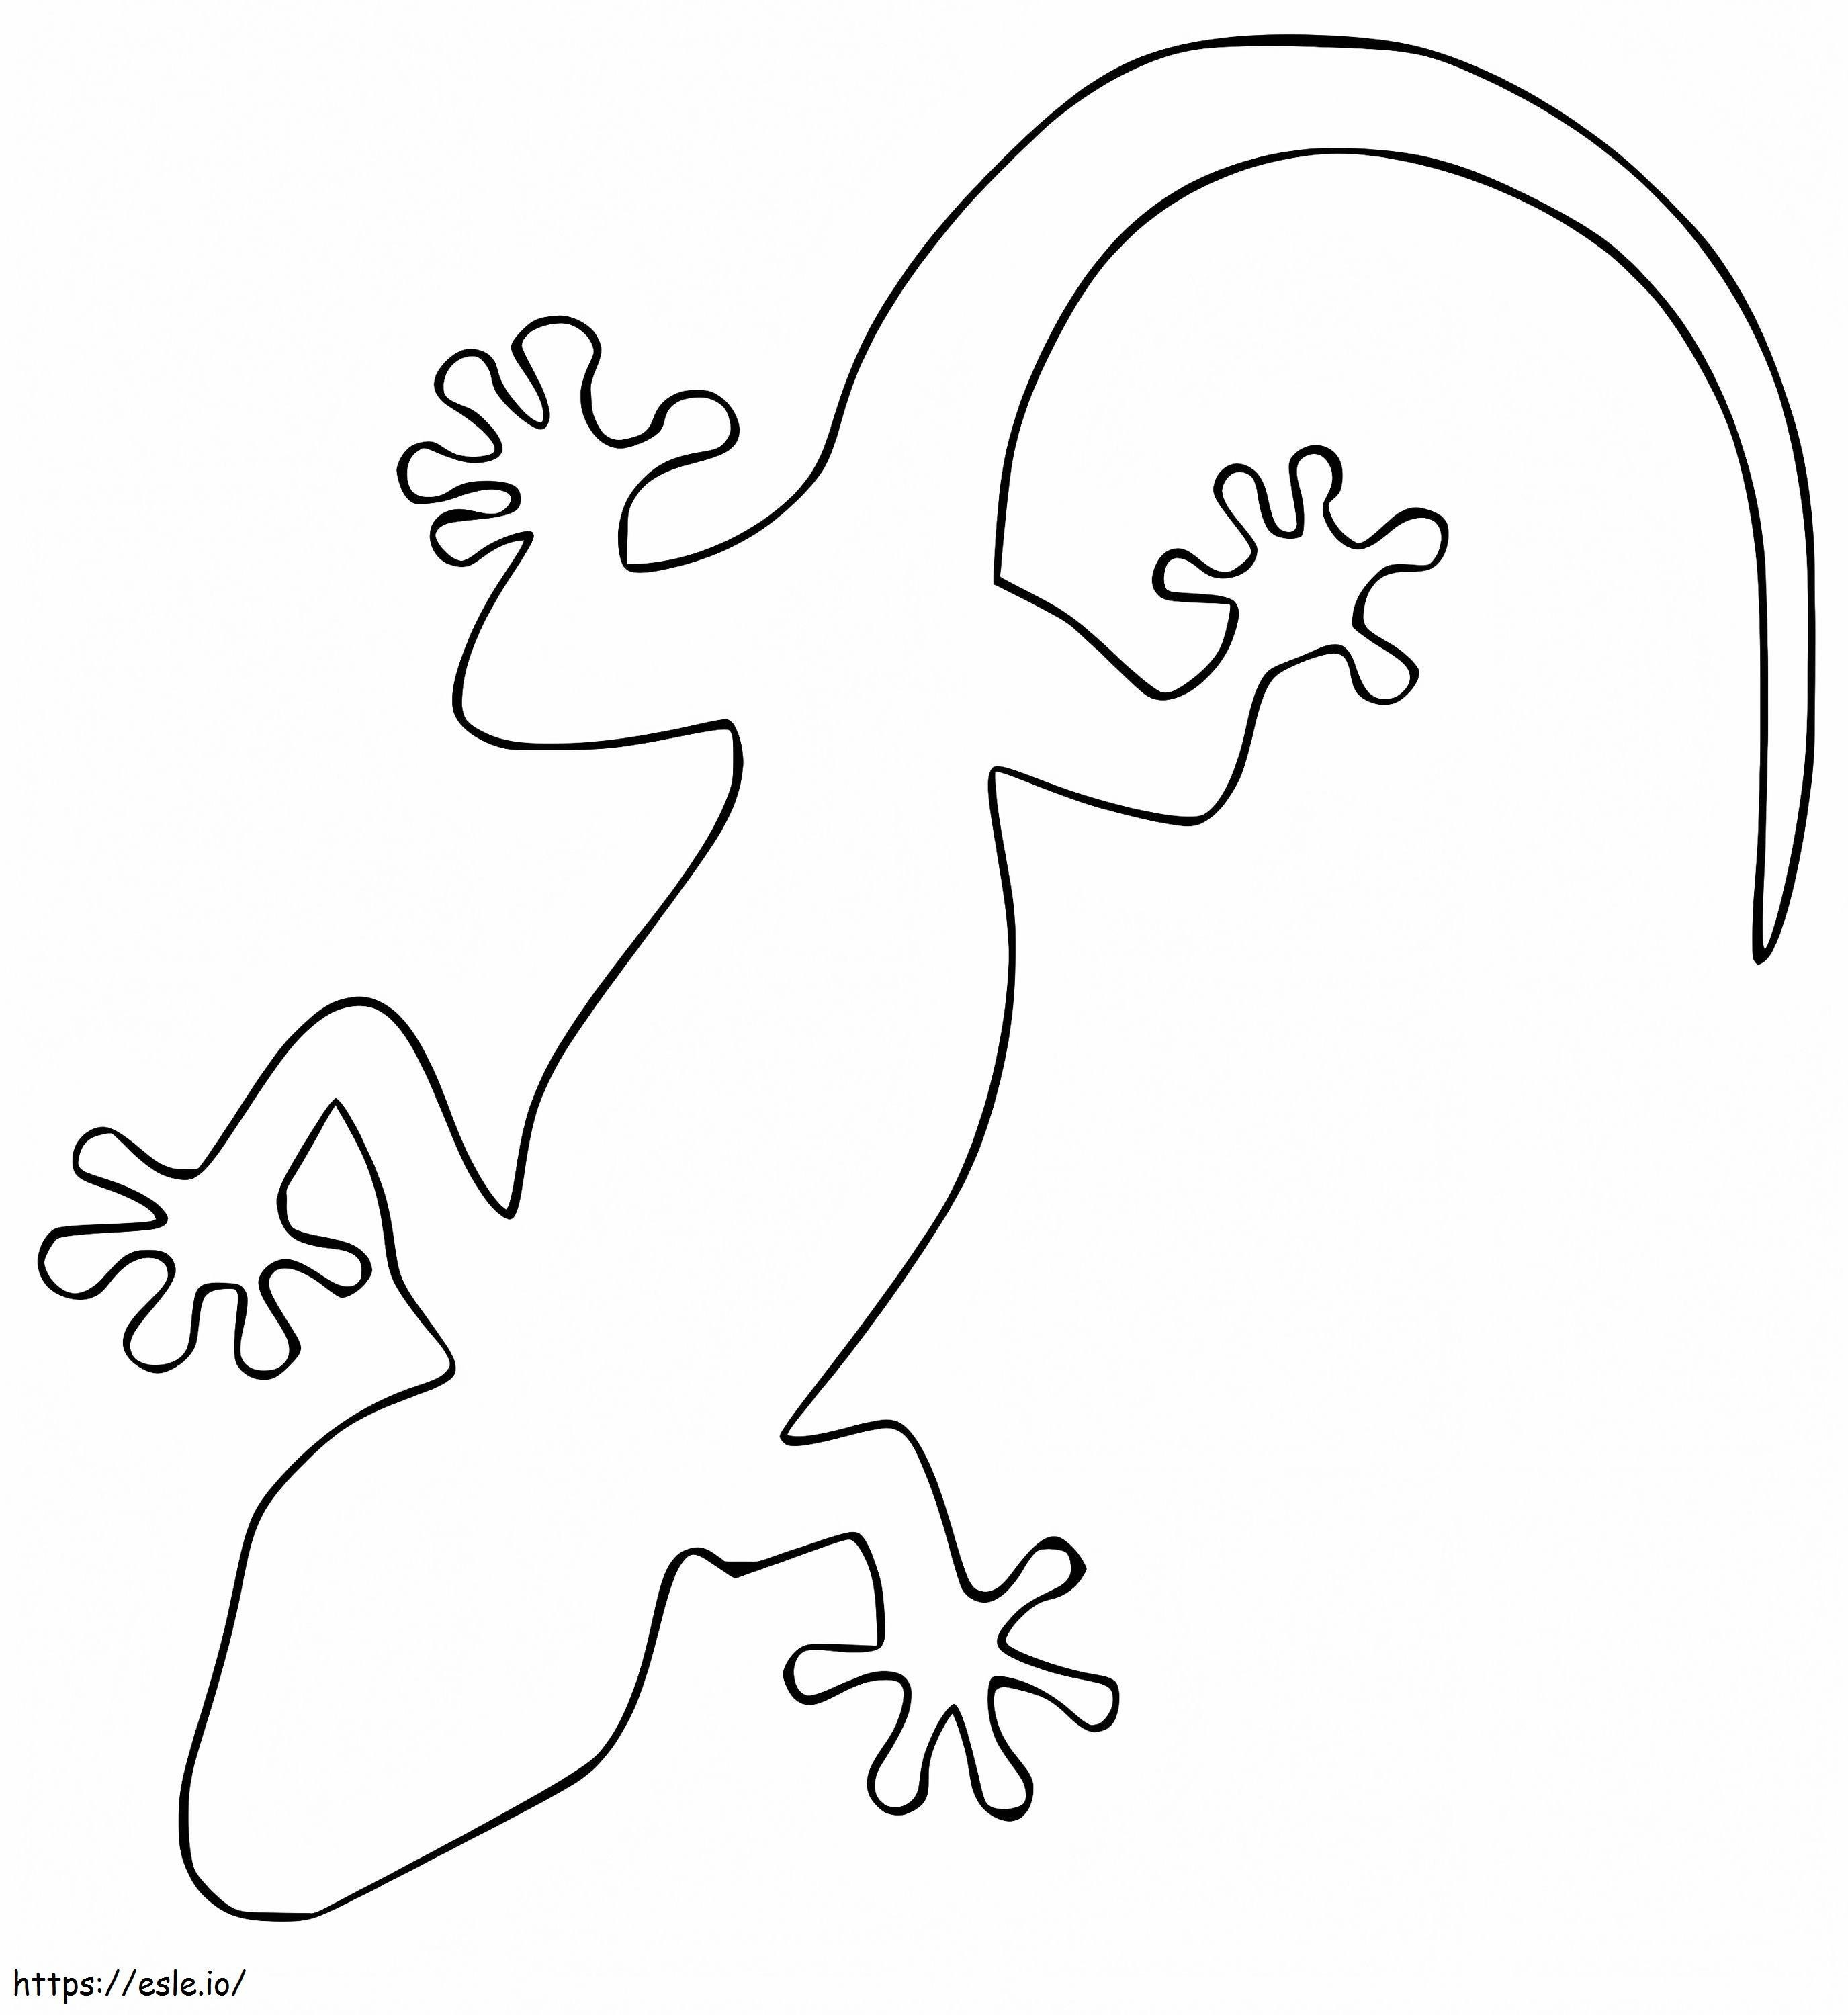 Esquema de Gecko gratuito para colorear